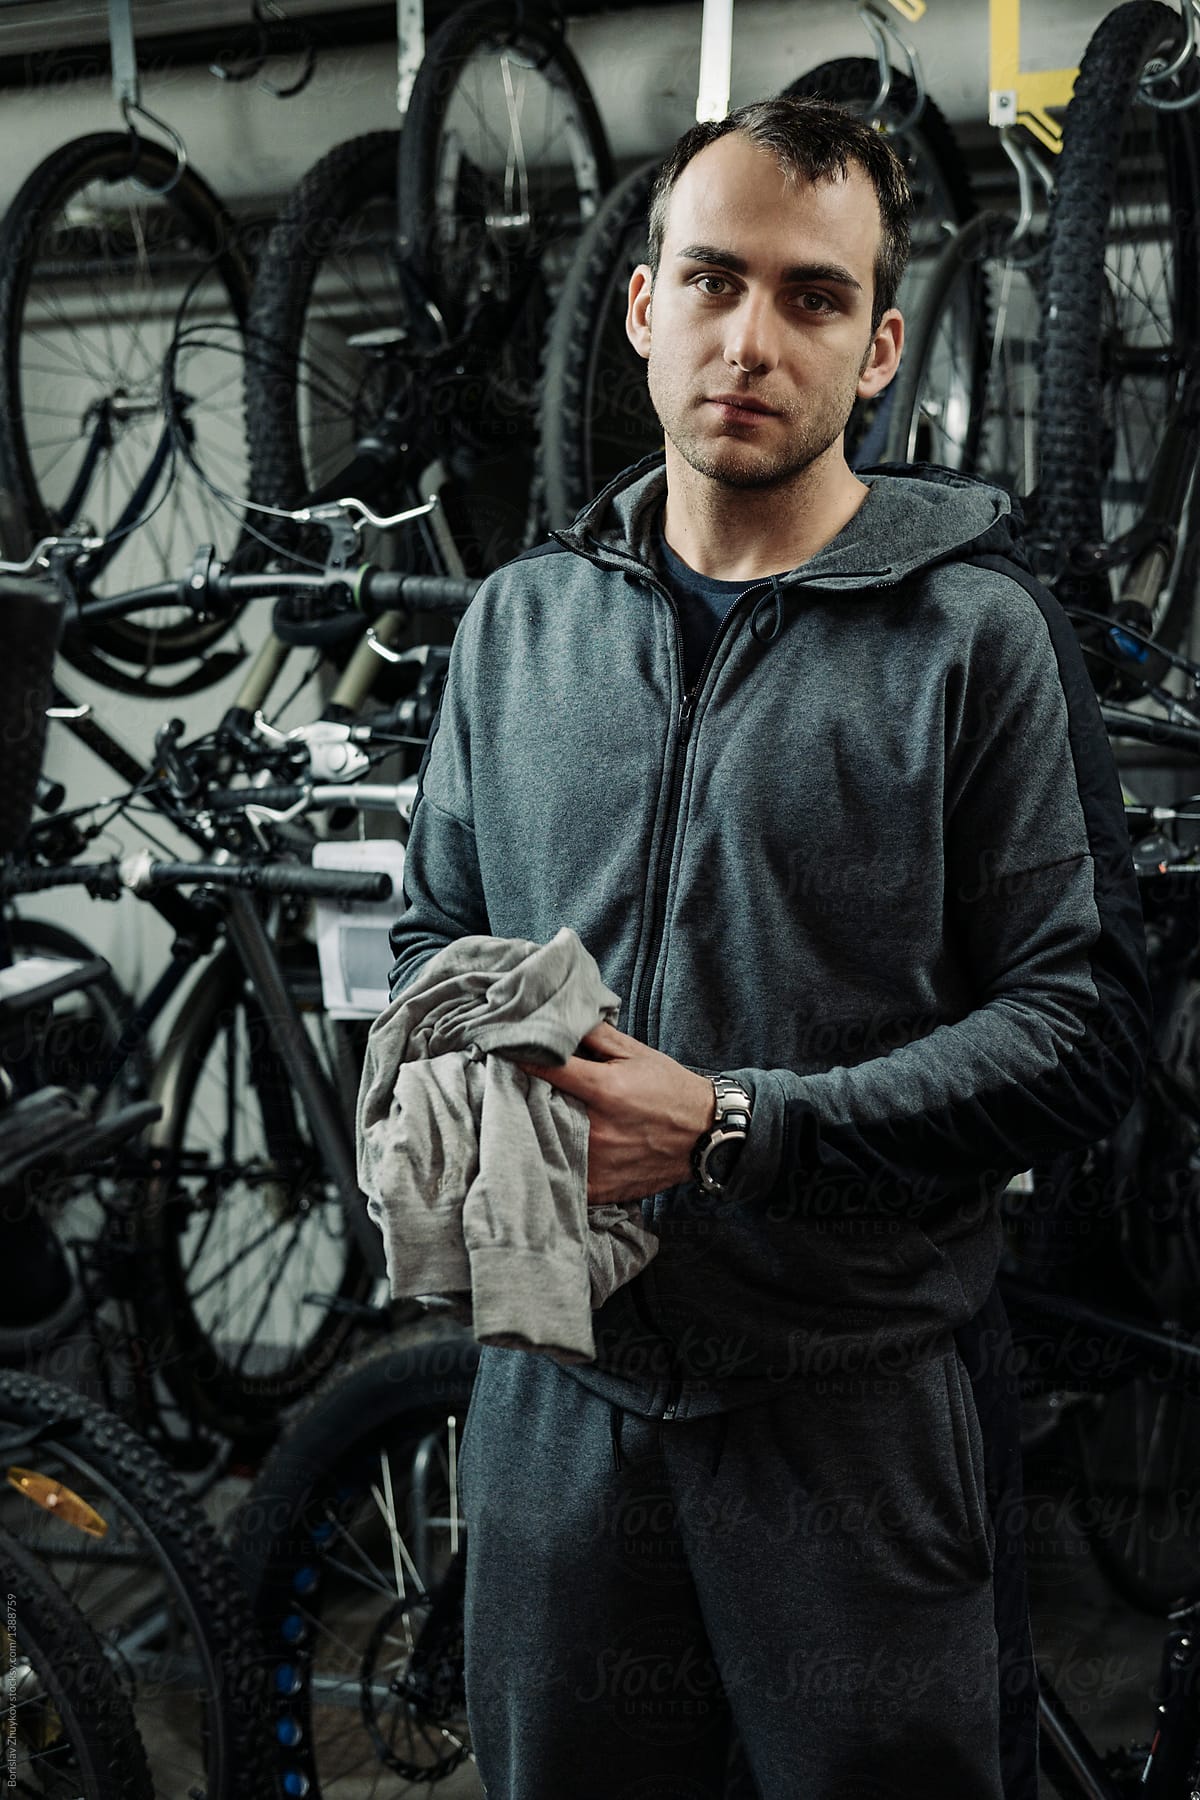 Bicycle mechanic at work